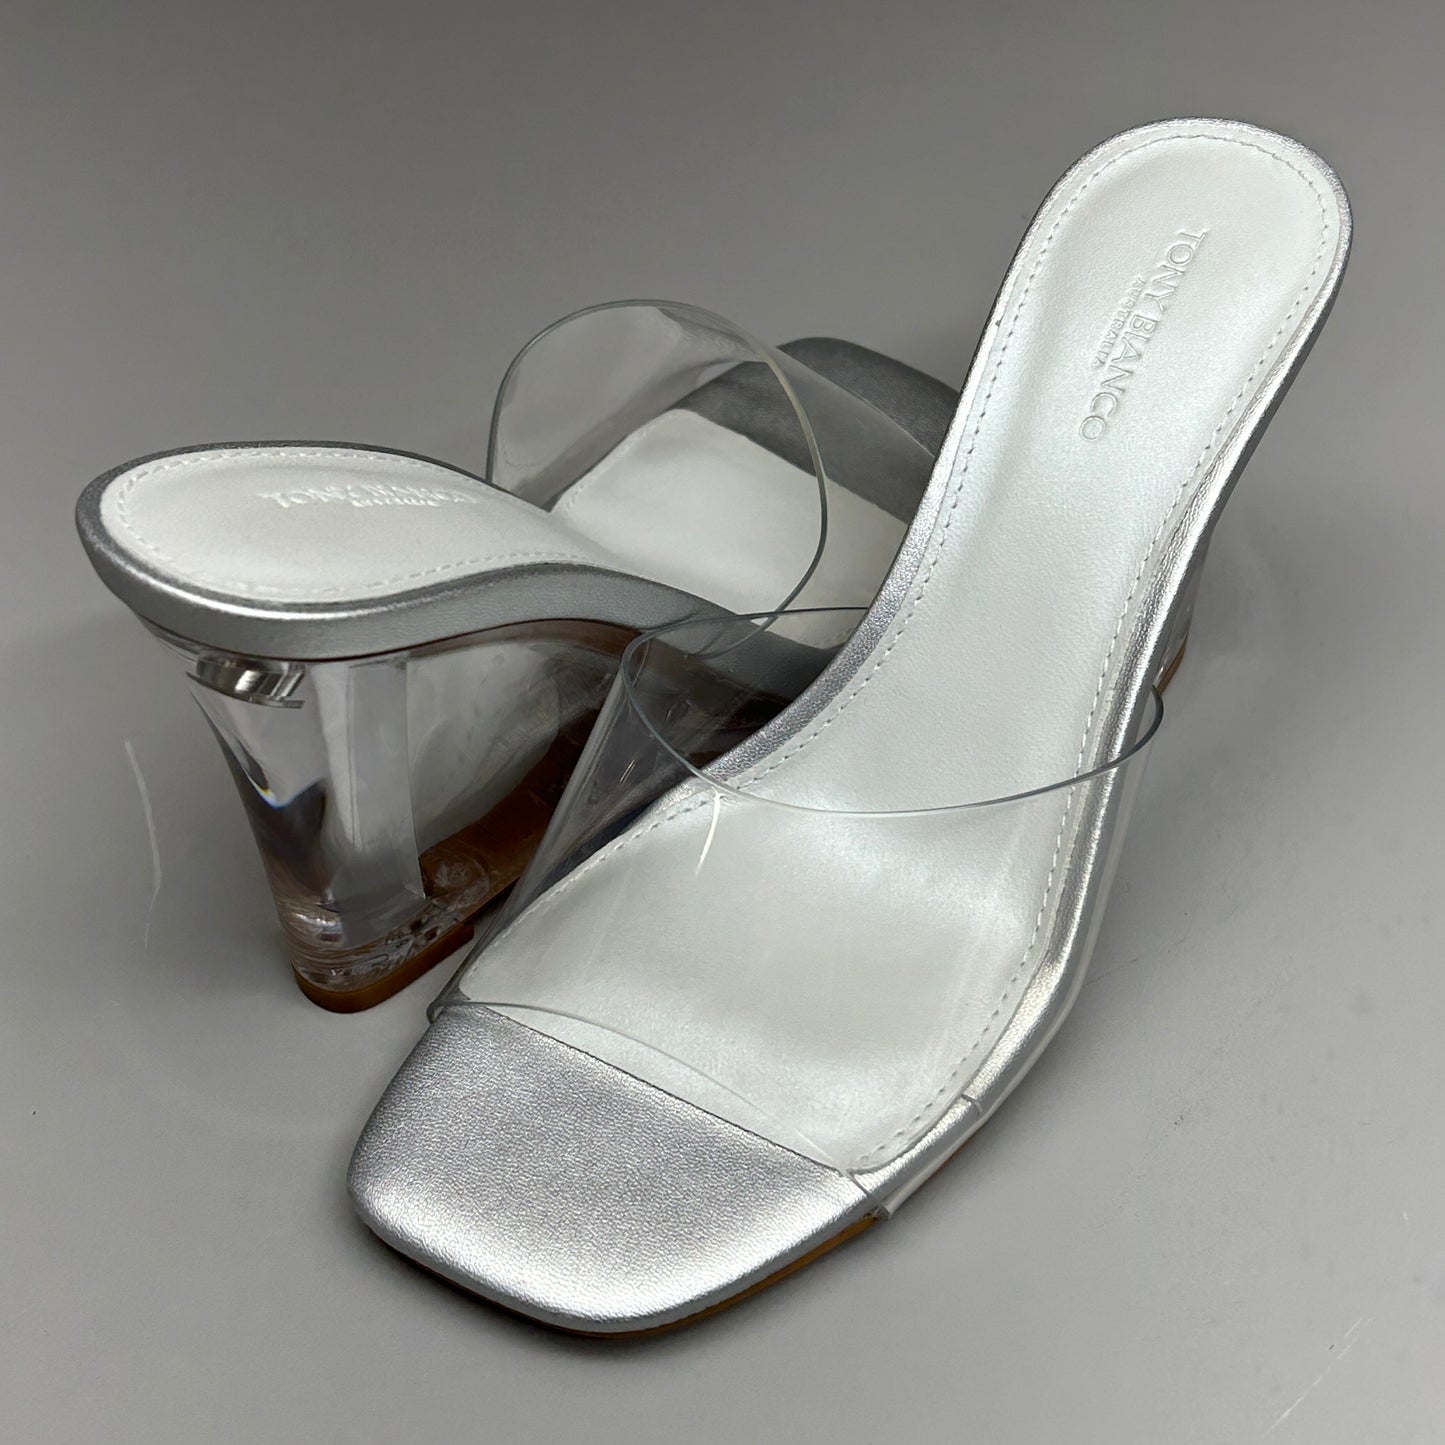 TONY BIANCO Alessi Clear Vinylite/Silver Wedges Women's Heels Sz 5.5 (New)